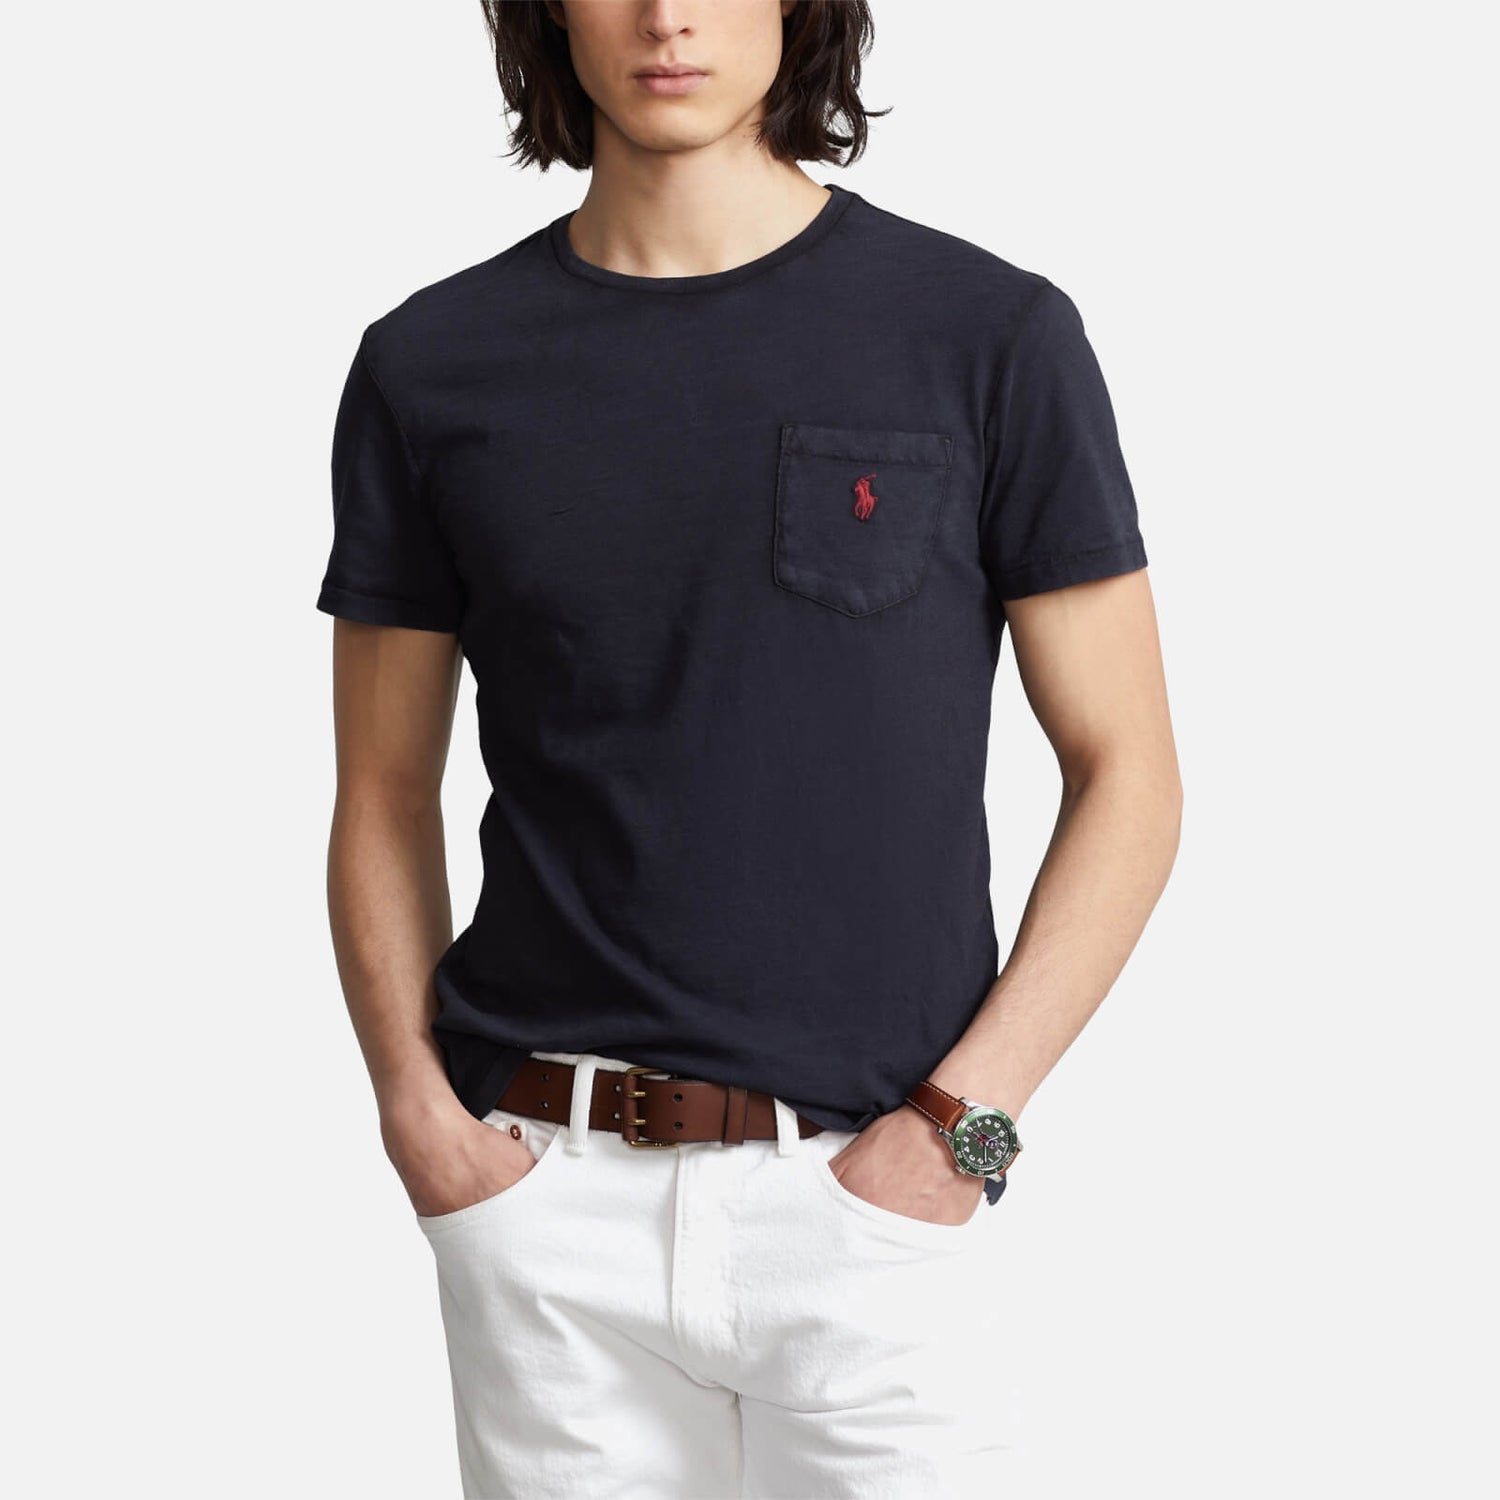 Polo Ralph Lauren Men's Custom Slim Fit Jersey Pocket T-Shirt - Polo Black - XXL